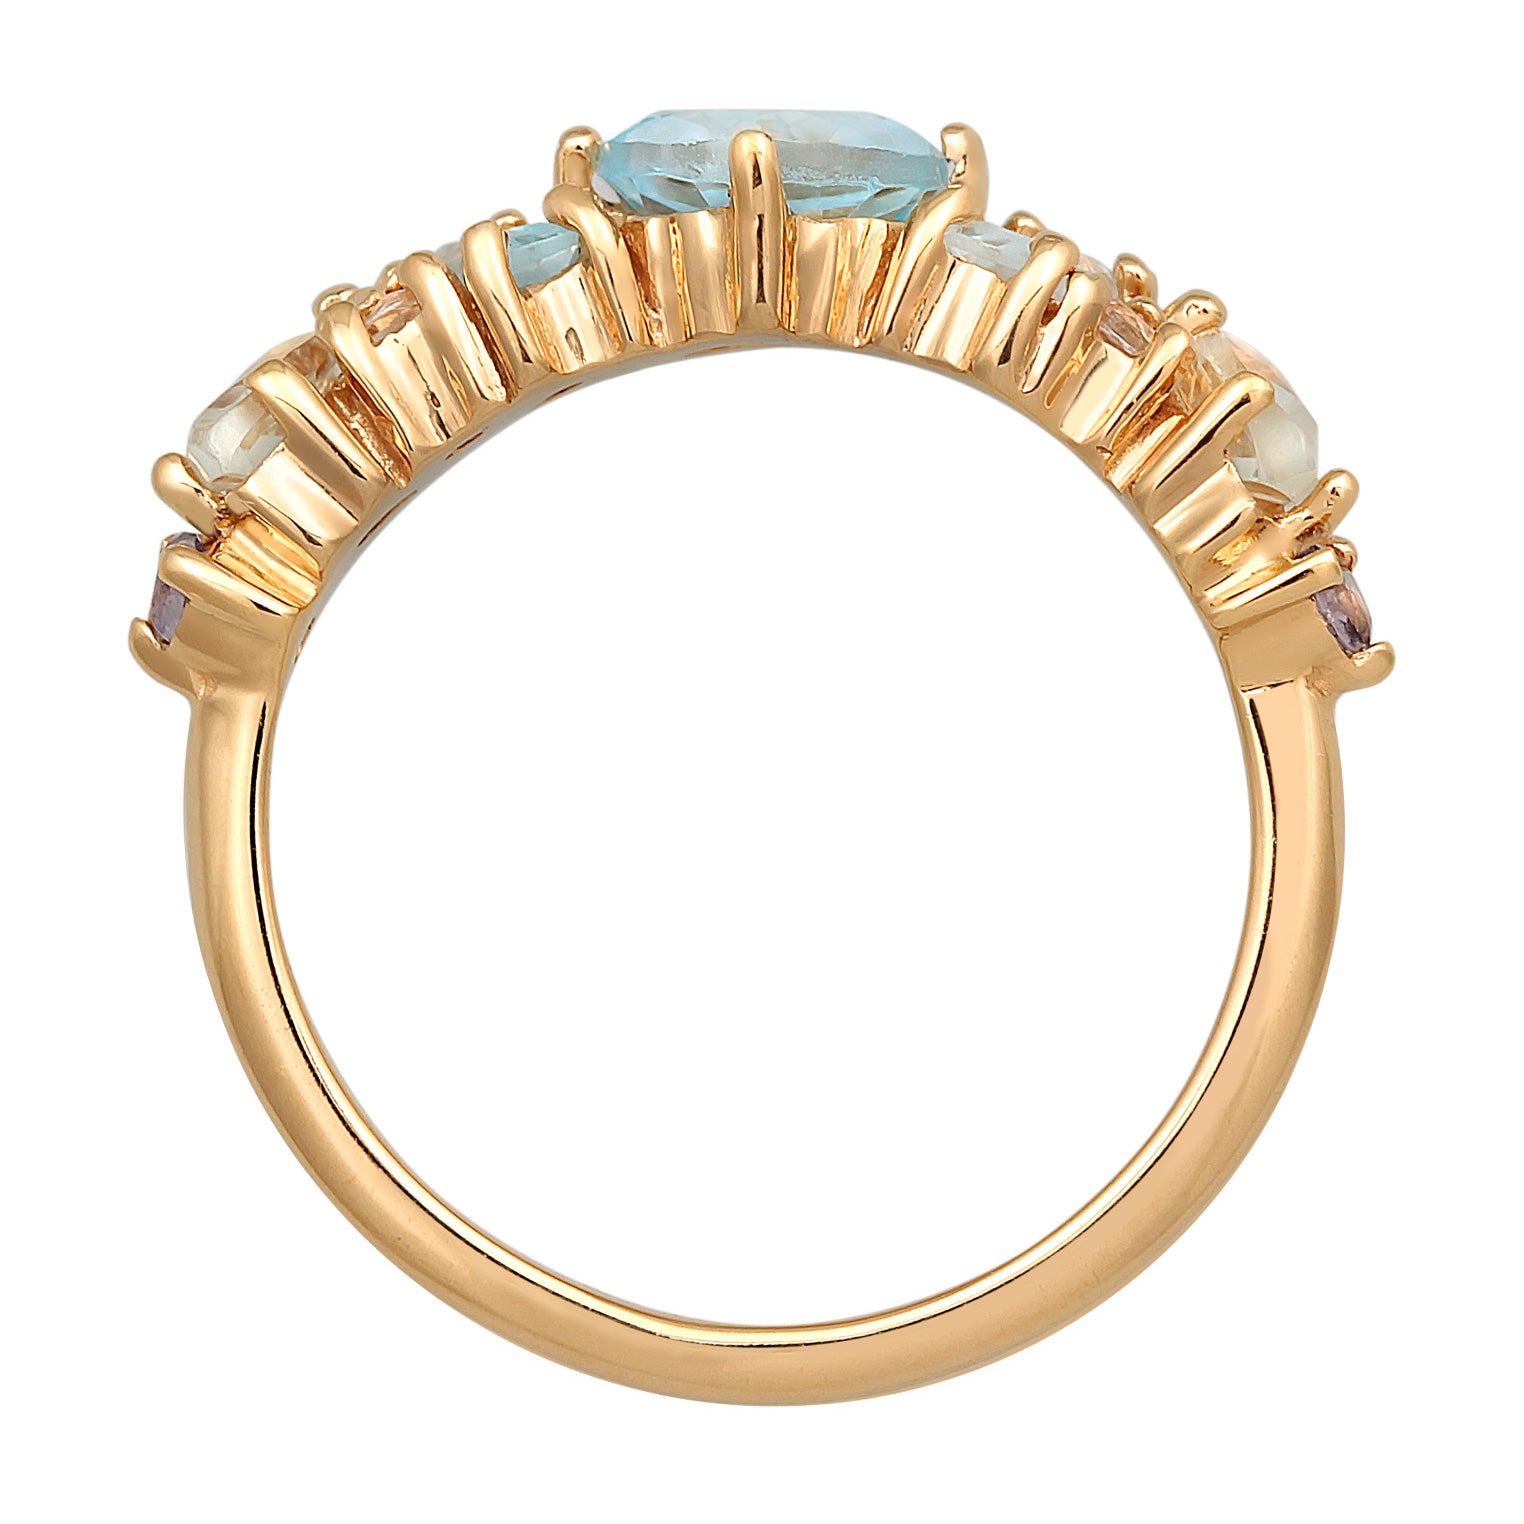 Gold - Elli PREMIUM | Ring Glamourös | Topas, Mondstein, Amethyst (Bunt) | 925er Sterling Silber vergoldet